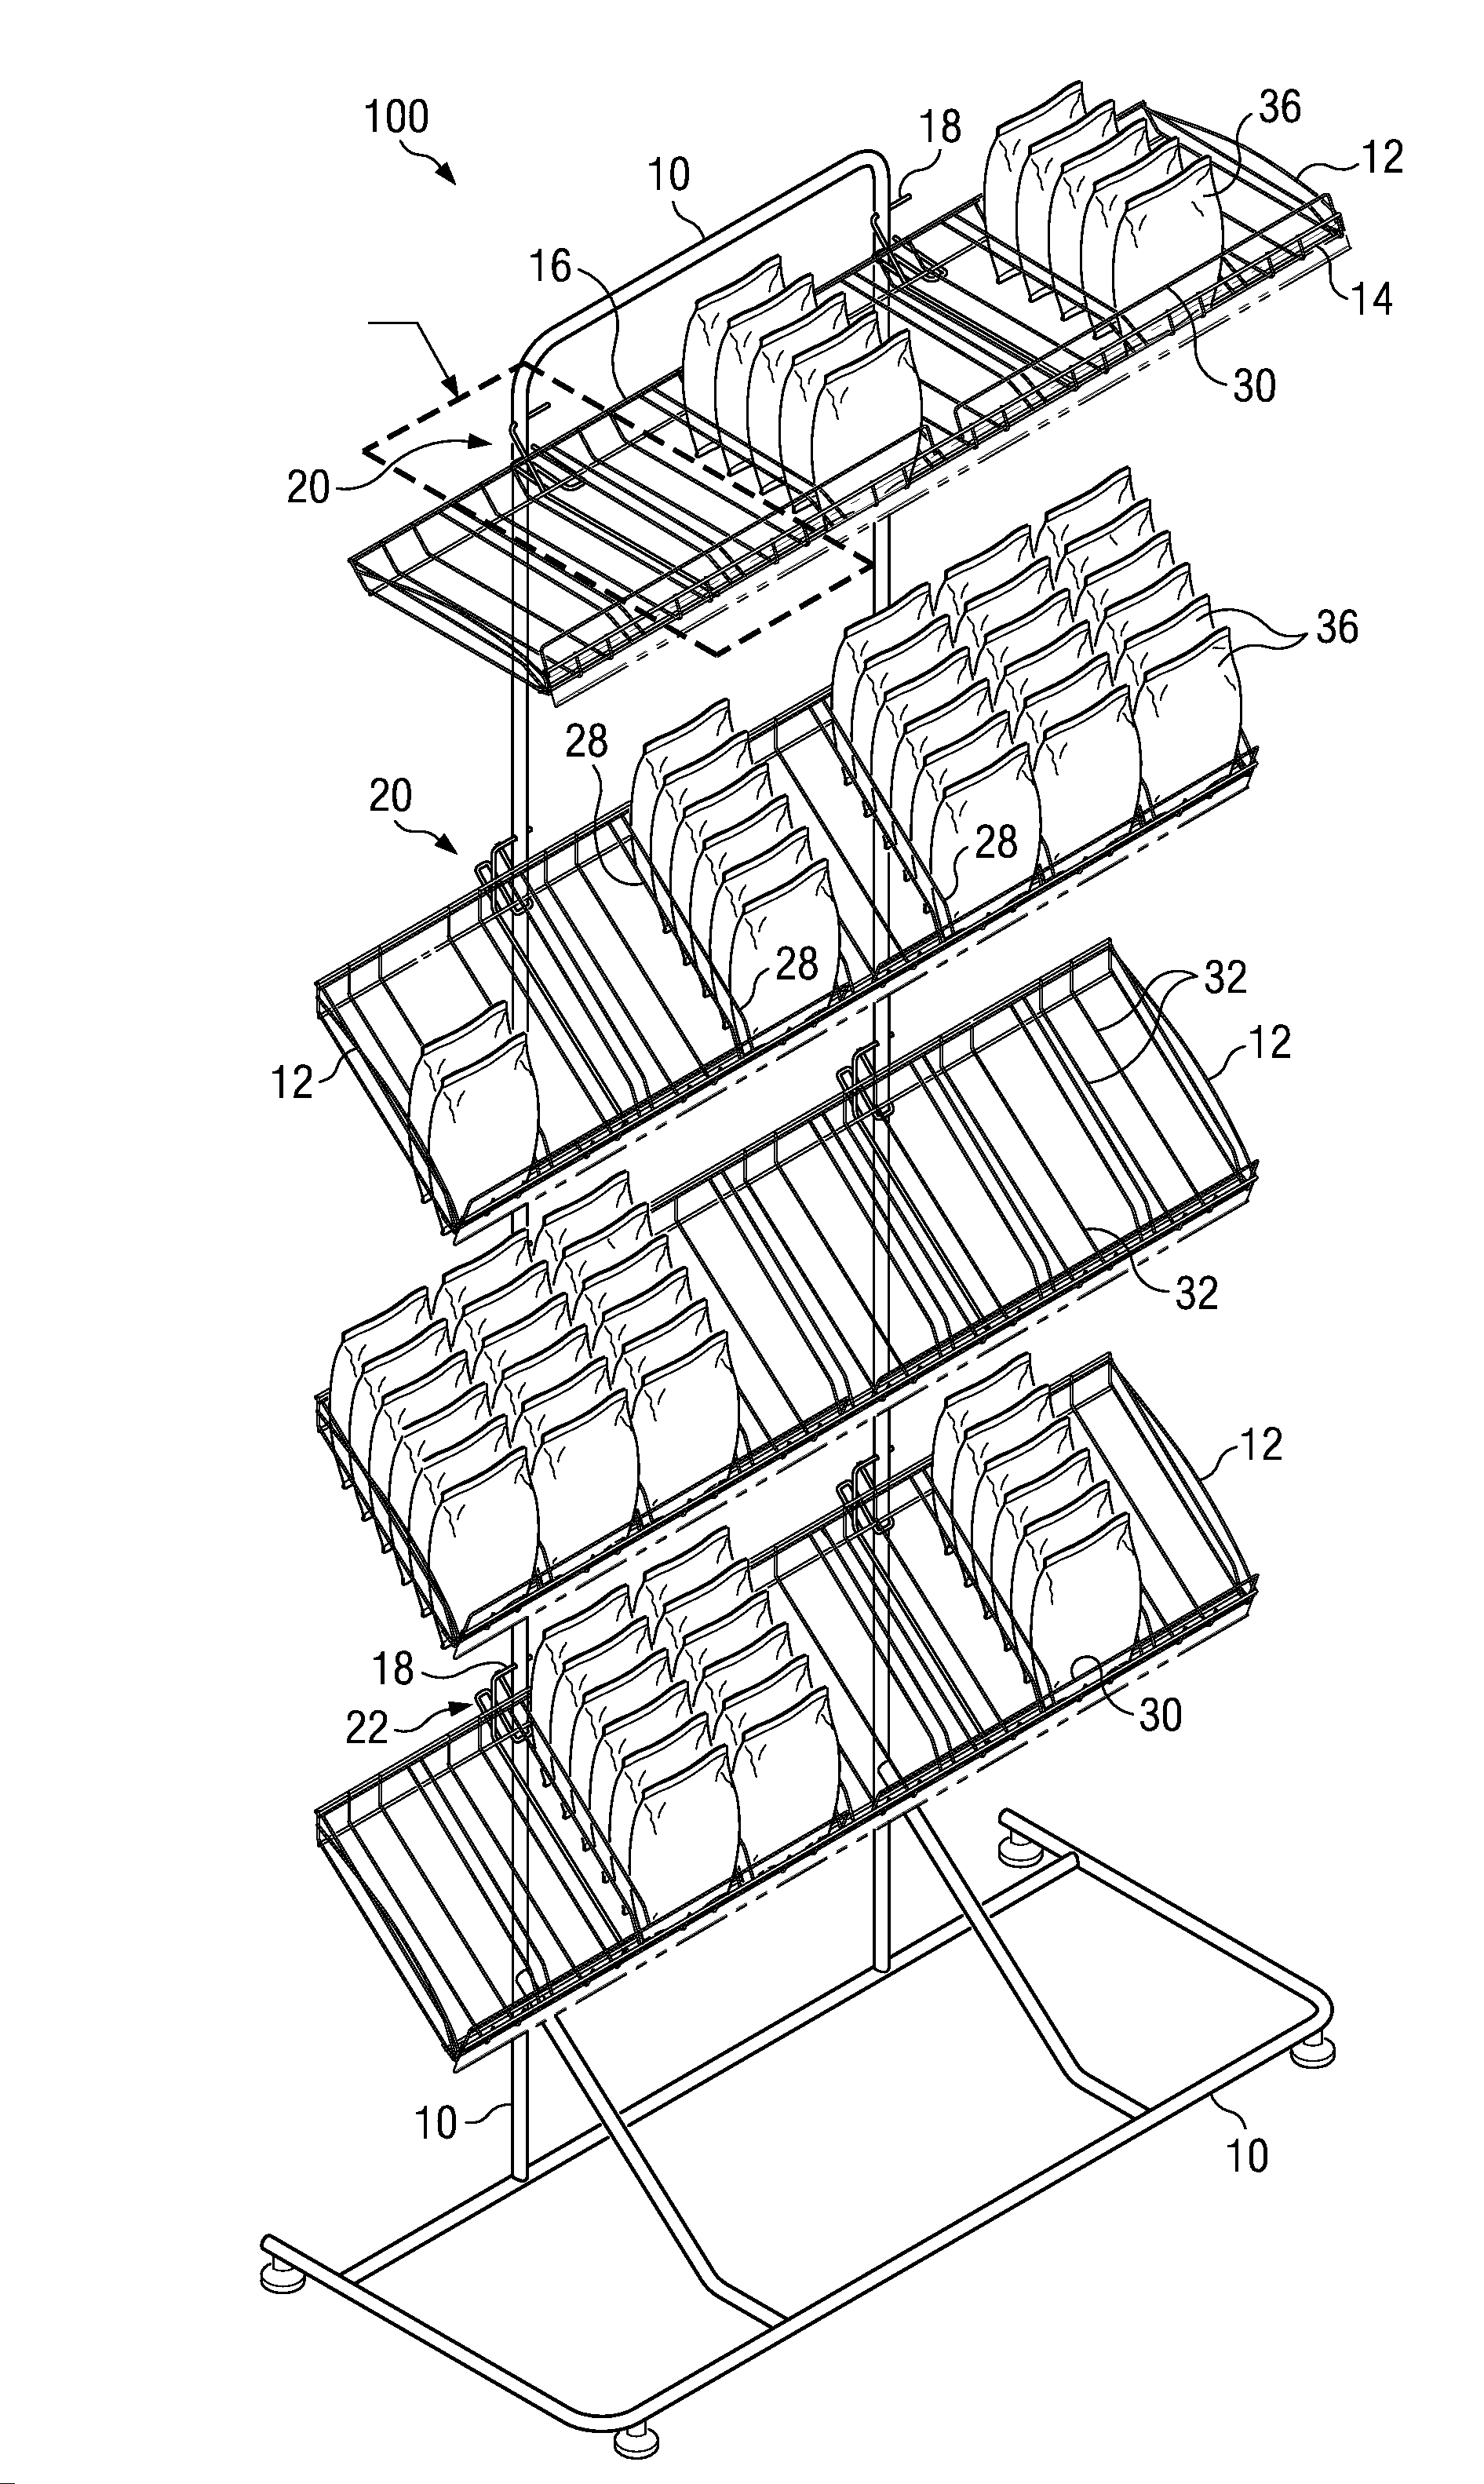 Display rack